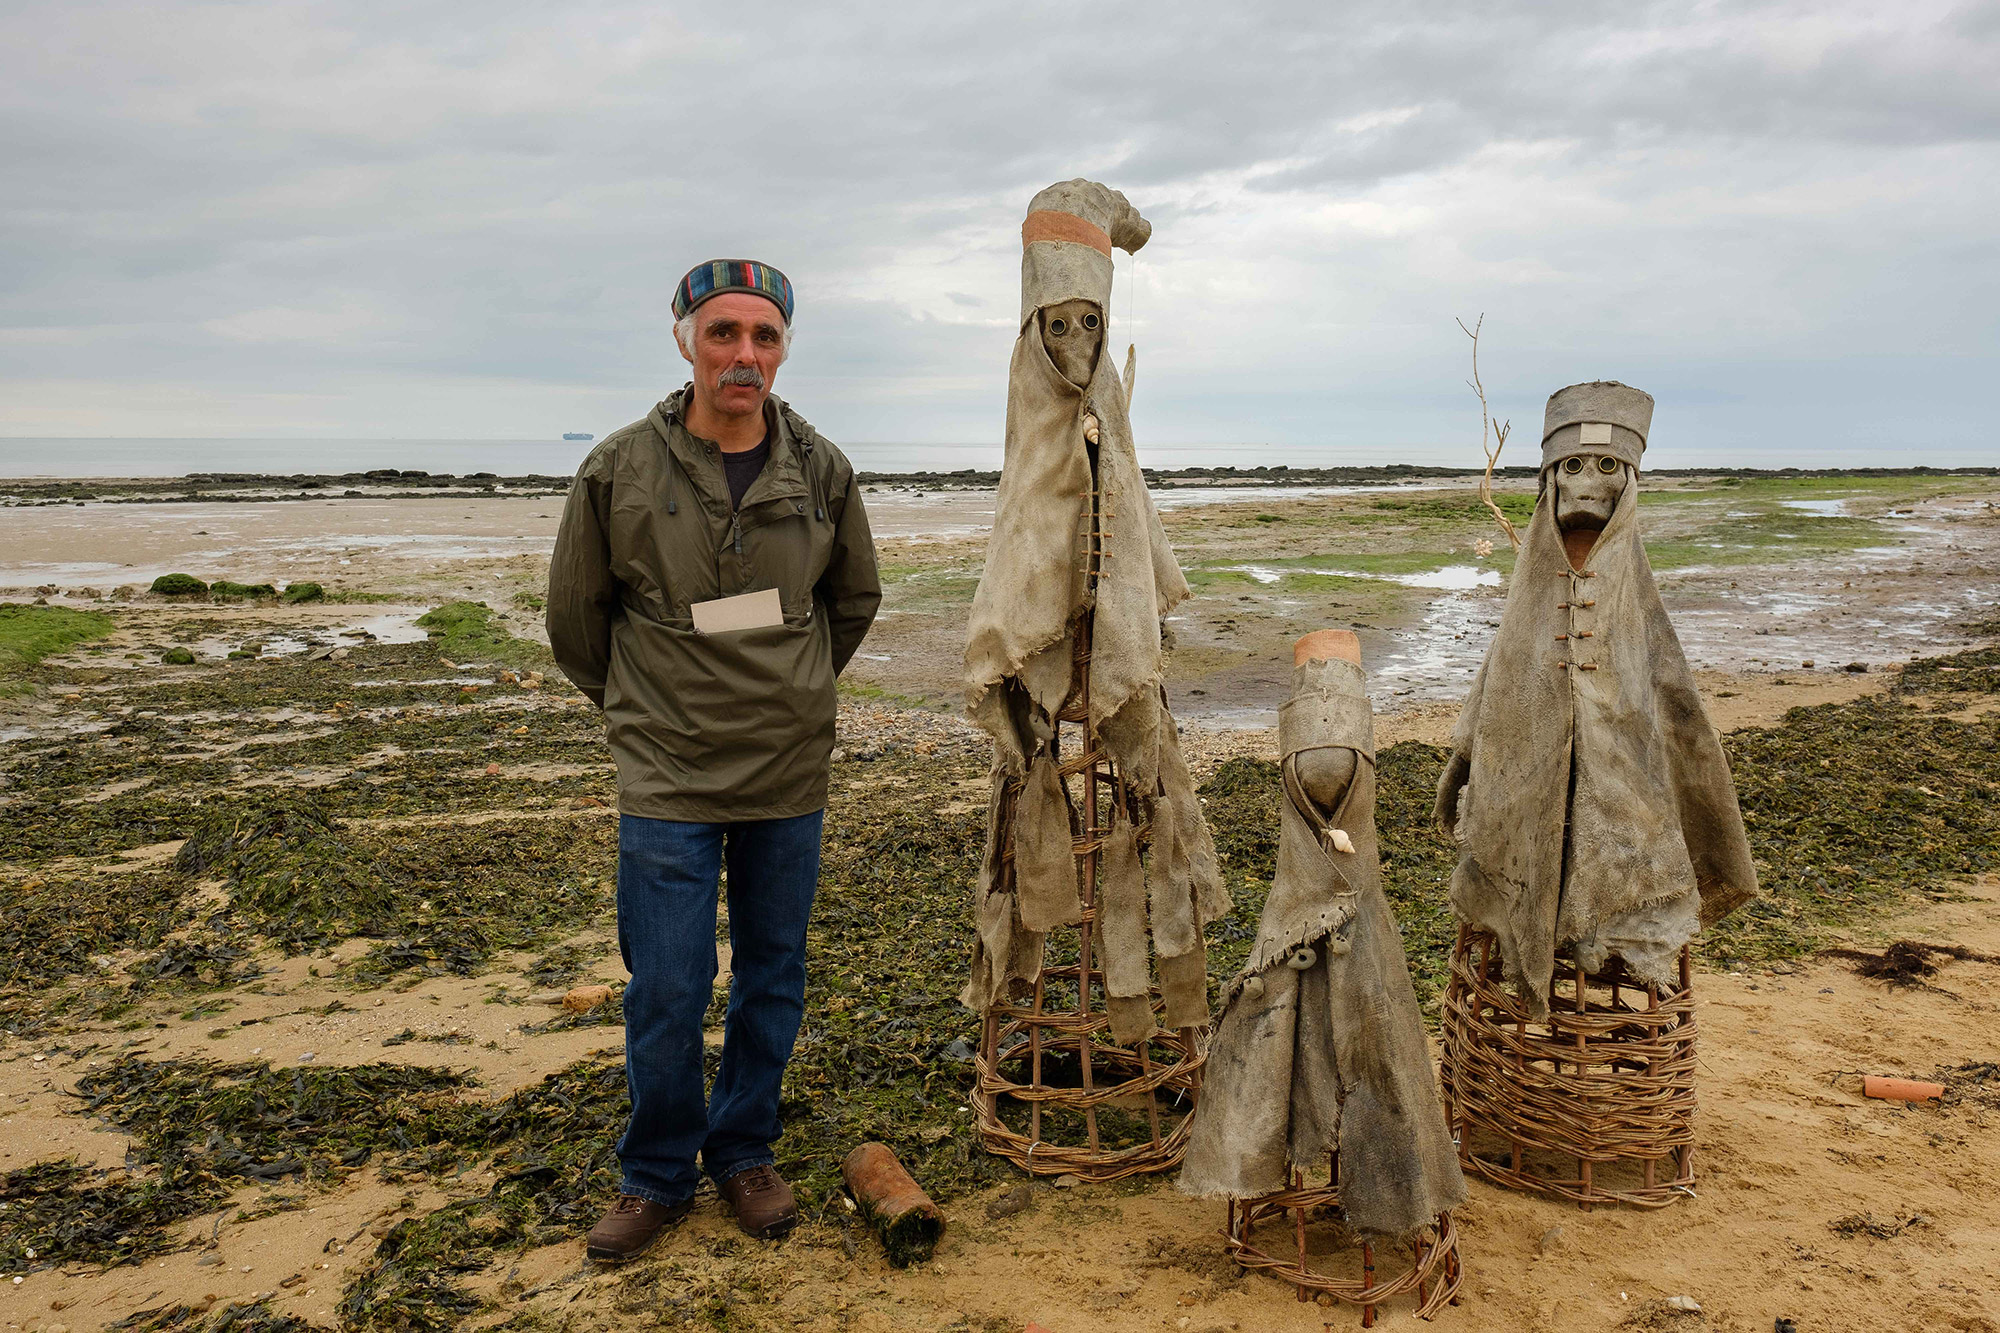 The Sea People art installation at Walton on the Naze